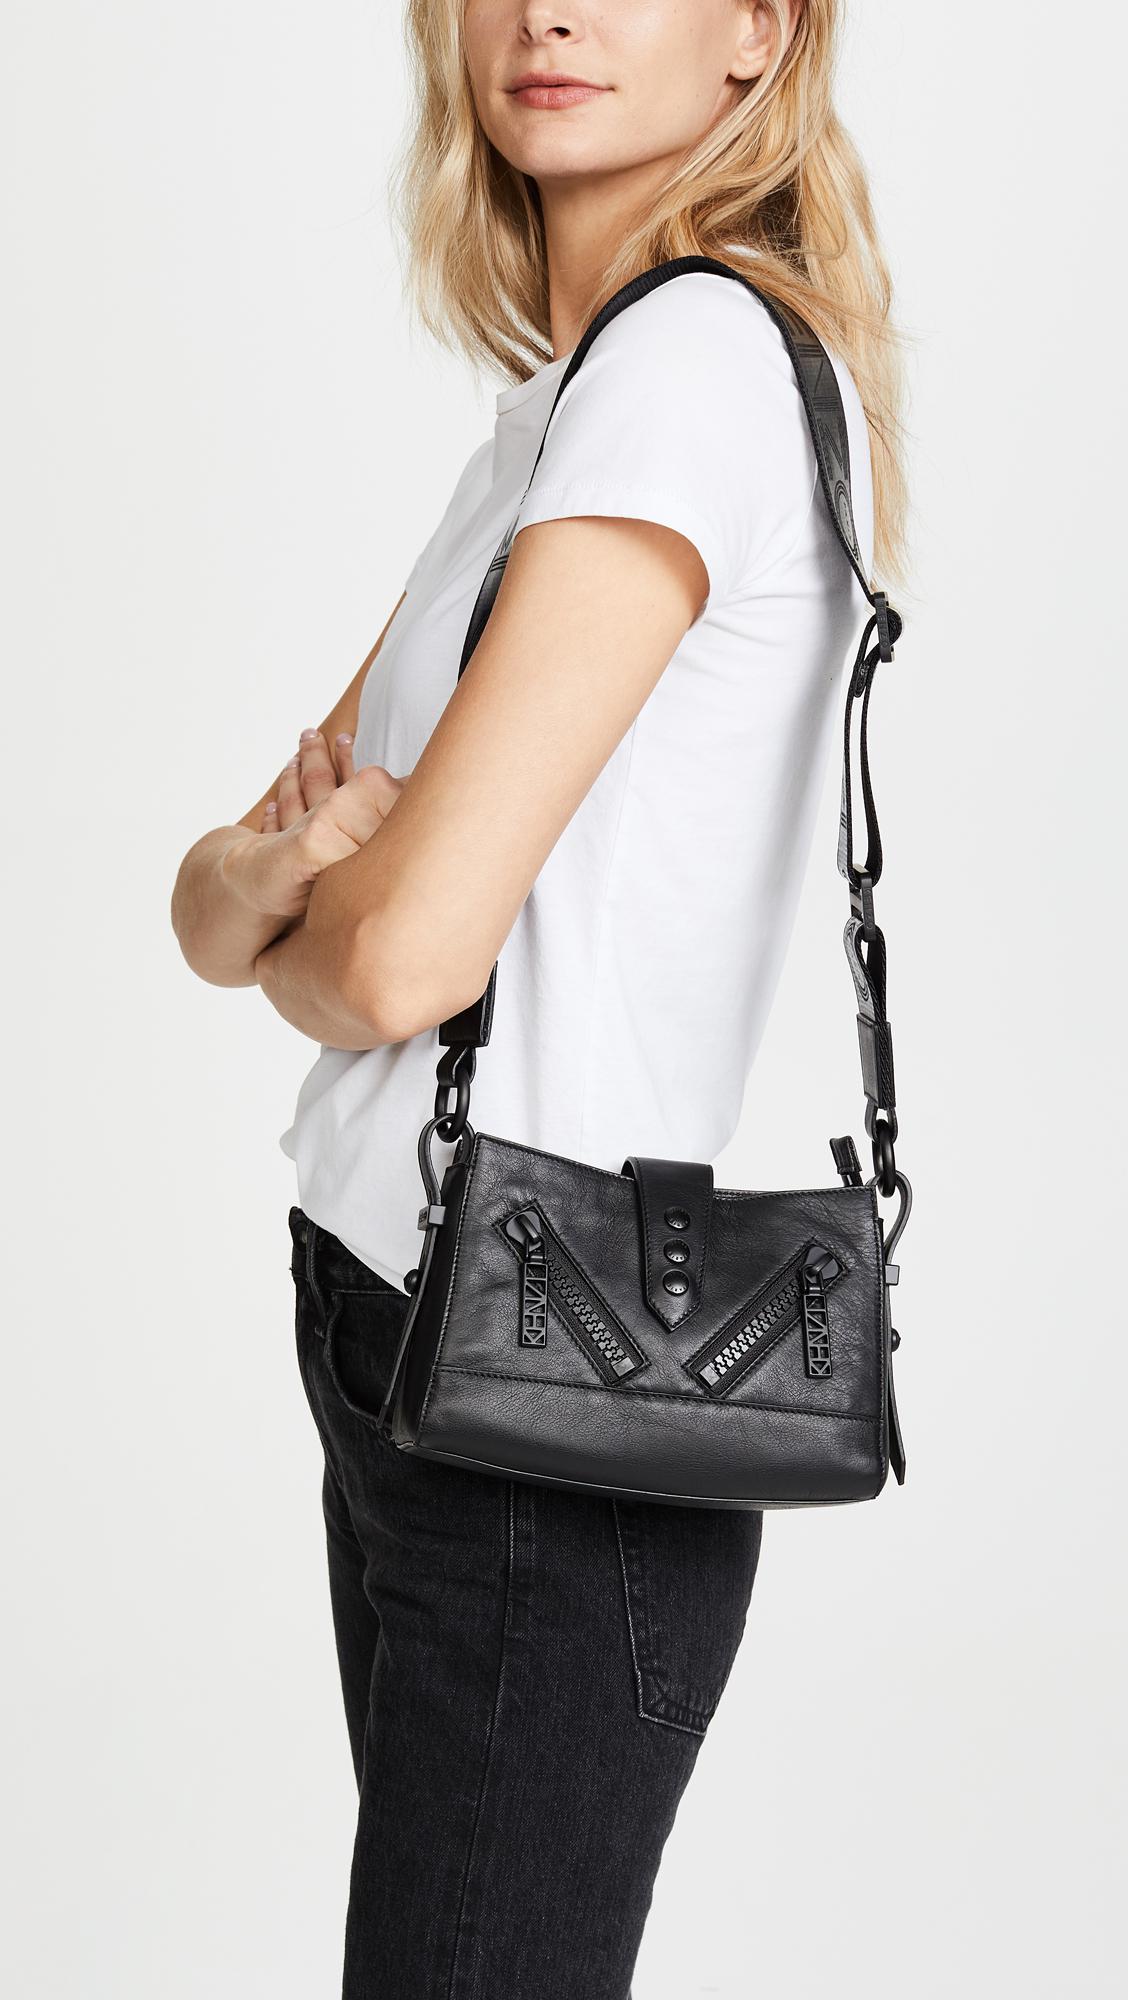 KENZO Leather Kalifornia Mini Shoulder Bag in Black - Lyst